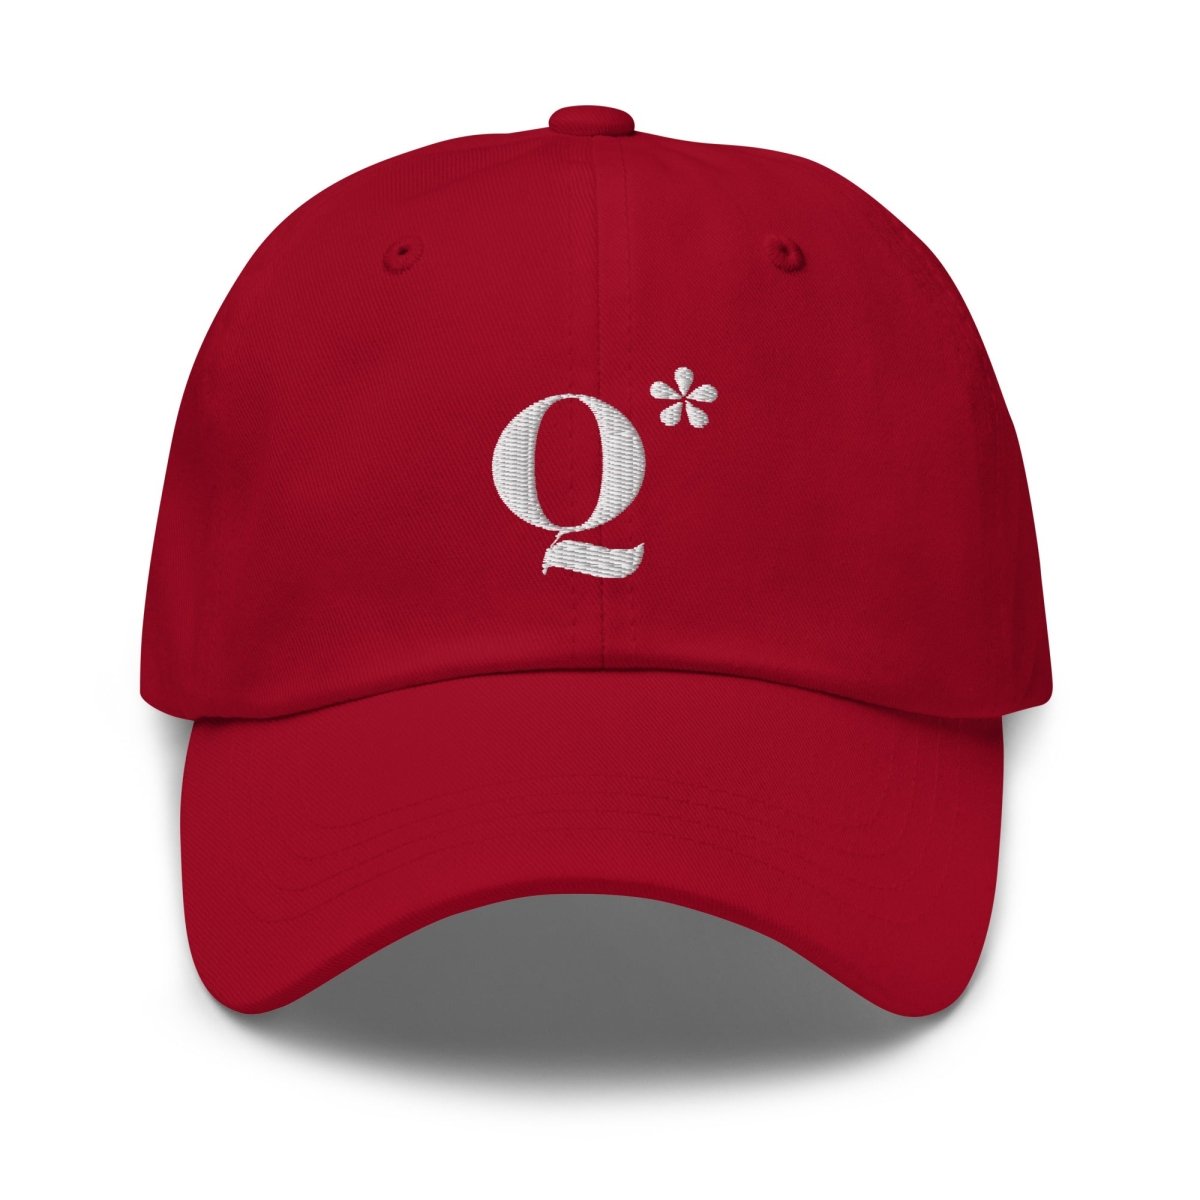 Q* (Q - Star) Embroidered Cap 3 - Cranberry - AI Store